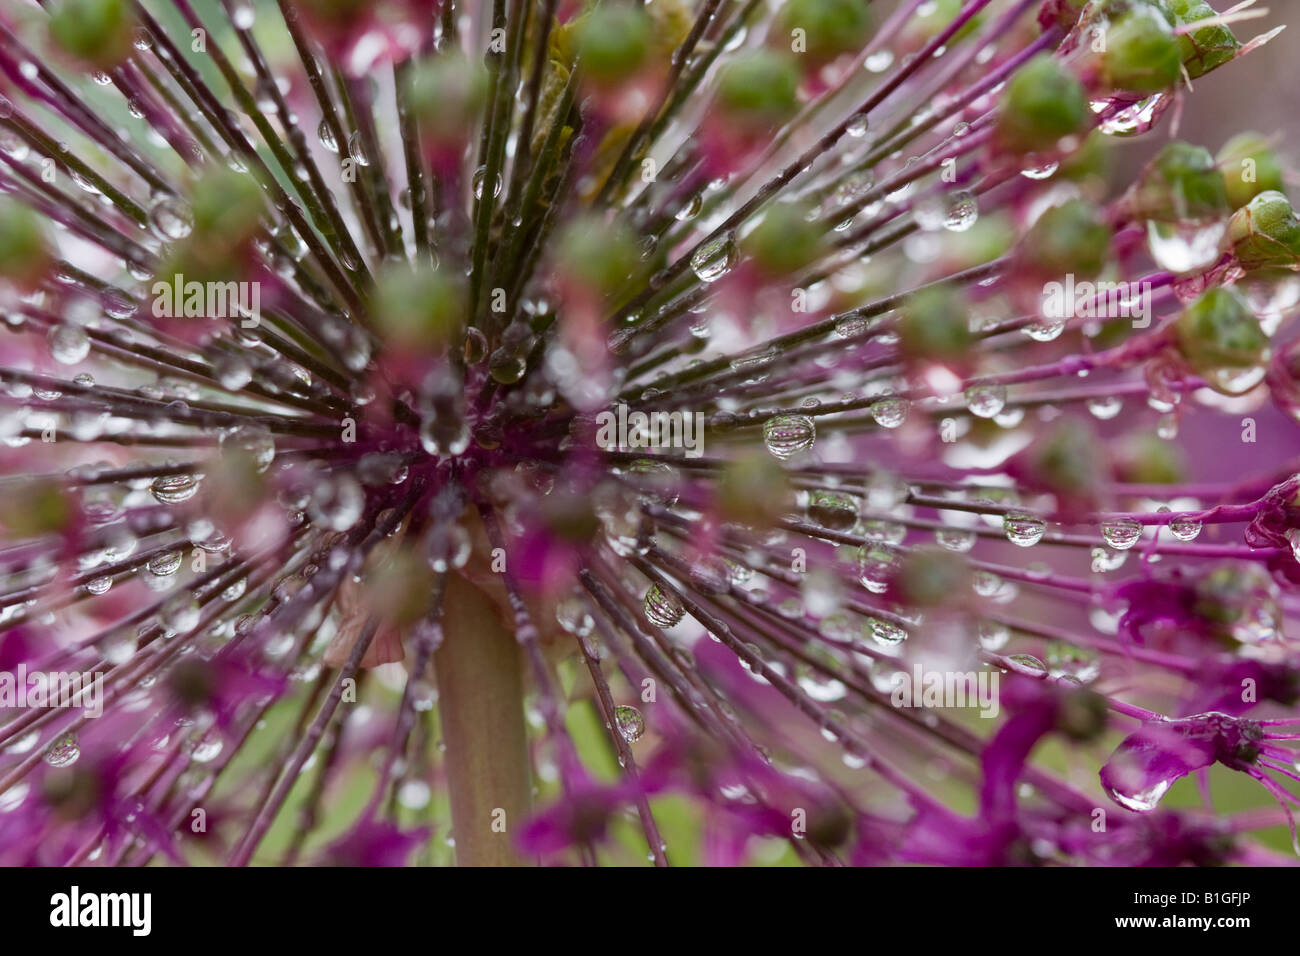 Water droplets on Allium flowerhead Stock Photo